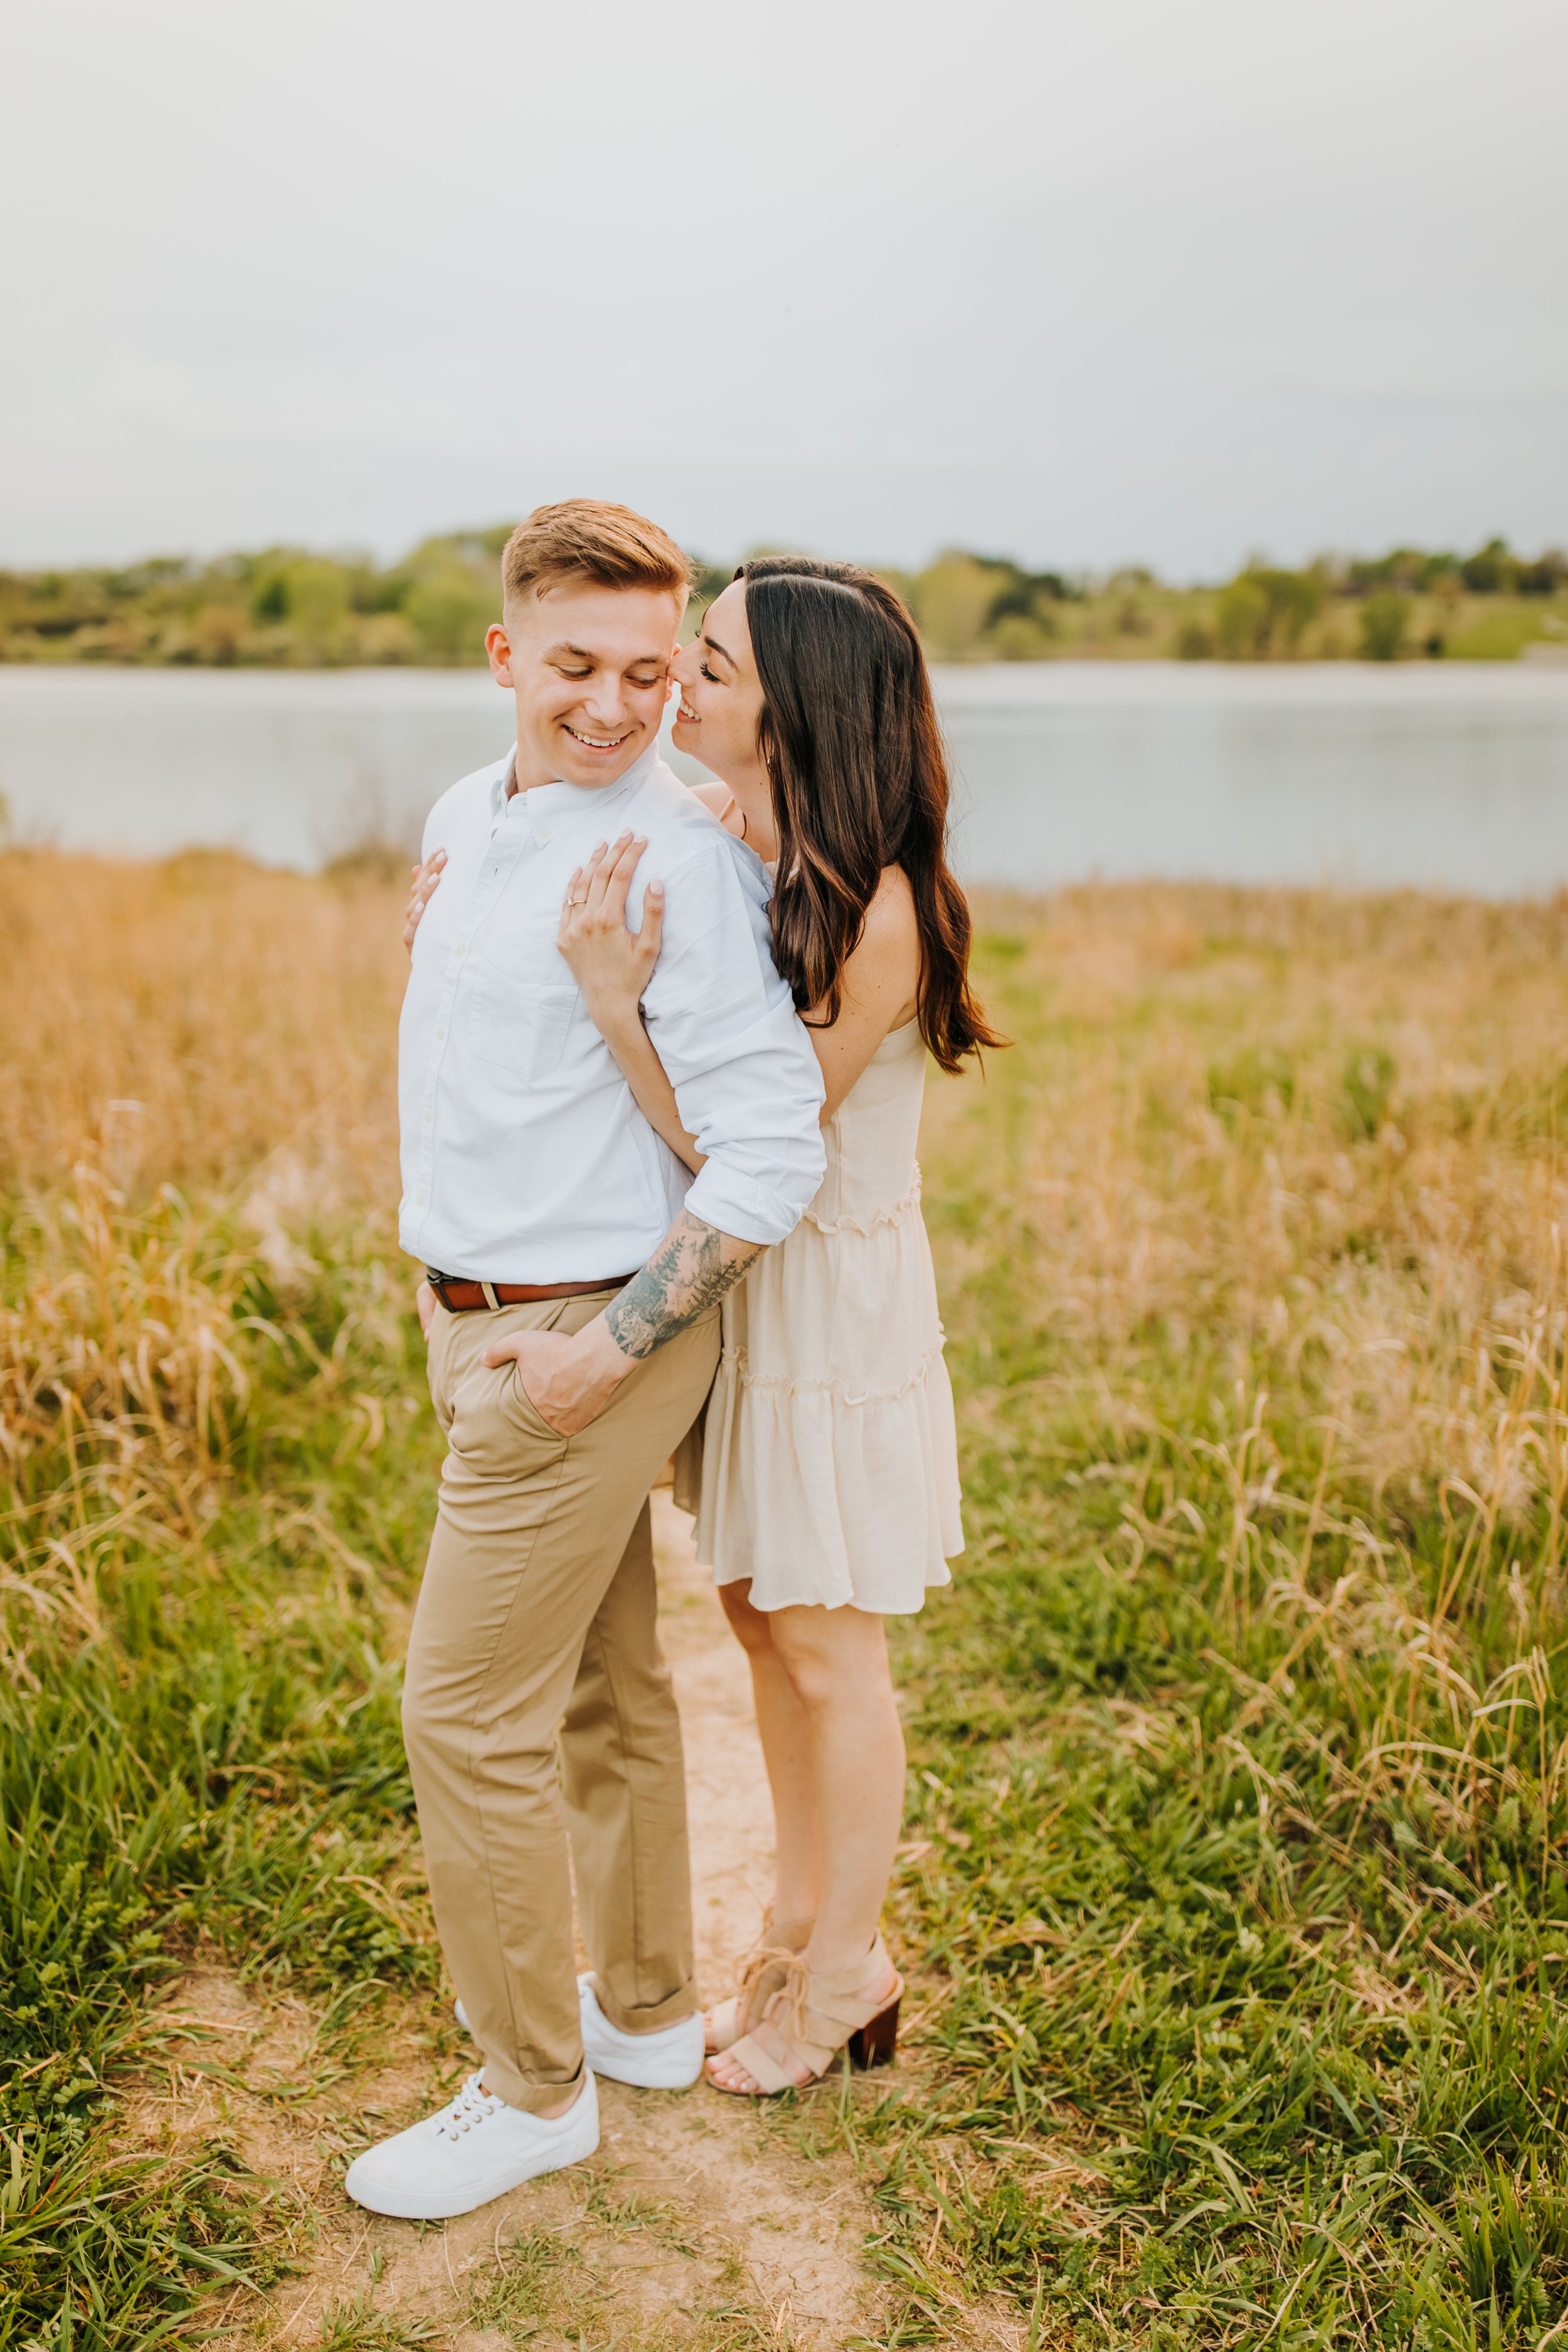 Allison & Liam - Engaged - Nathaniel Jensen Photography - Omaha Nebraska Wedding Photographer-107.jpg